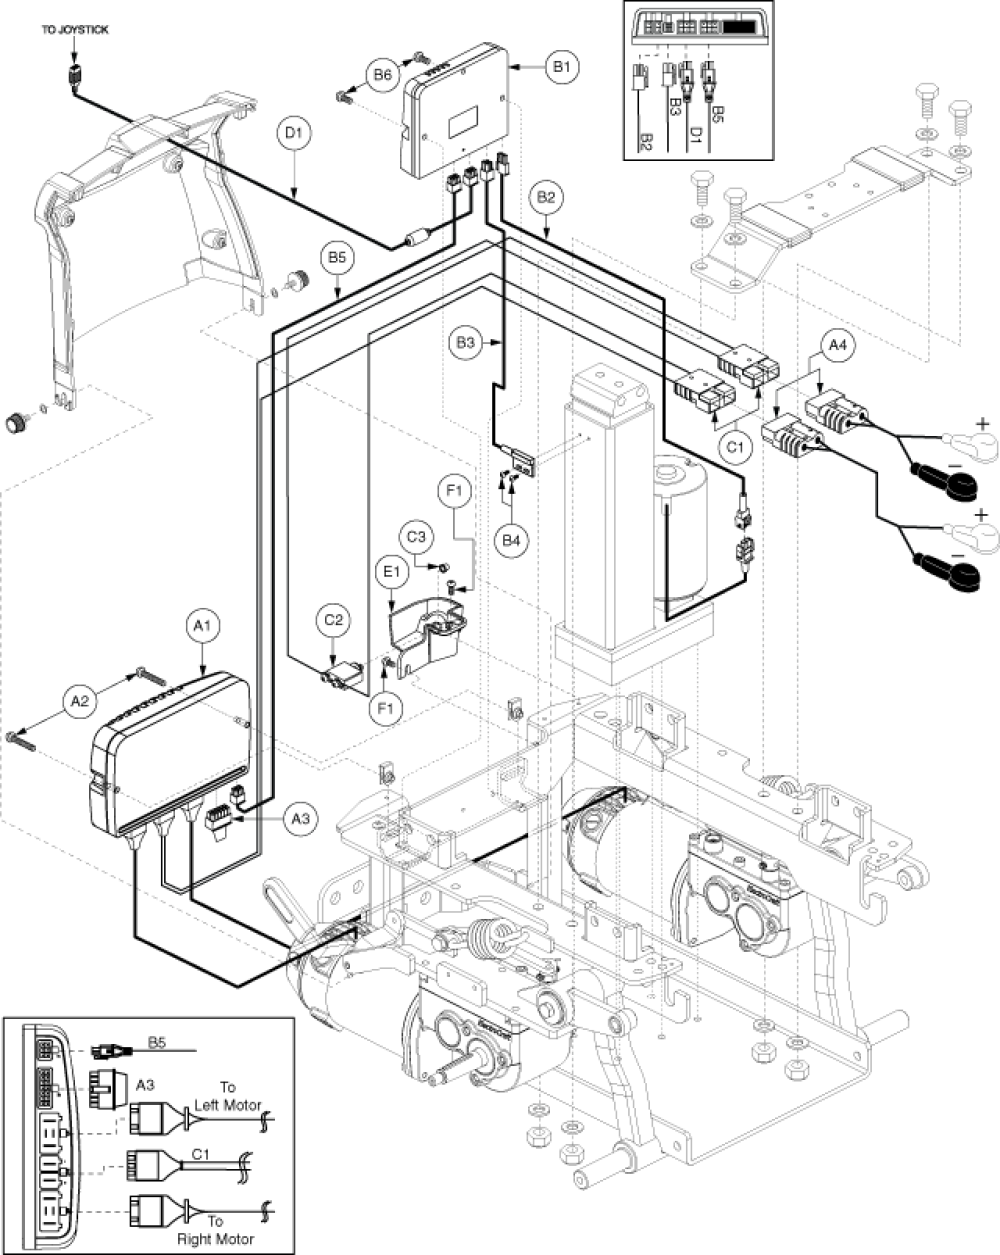 Q-logic, Power Seat Thru Joystick parts diagram